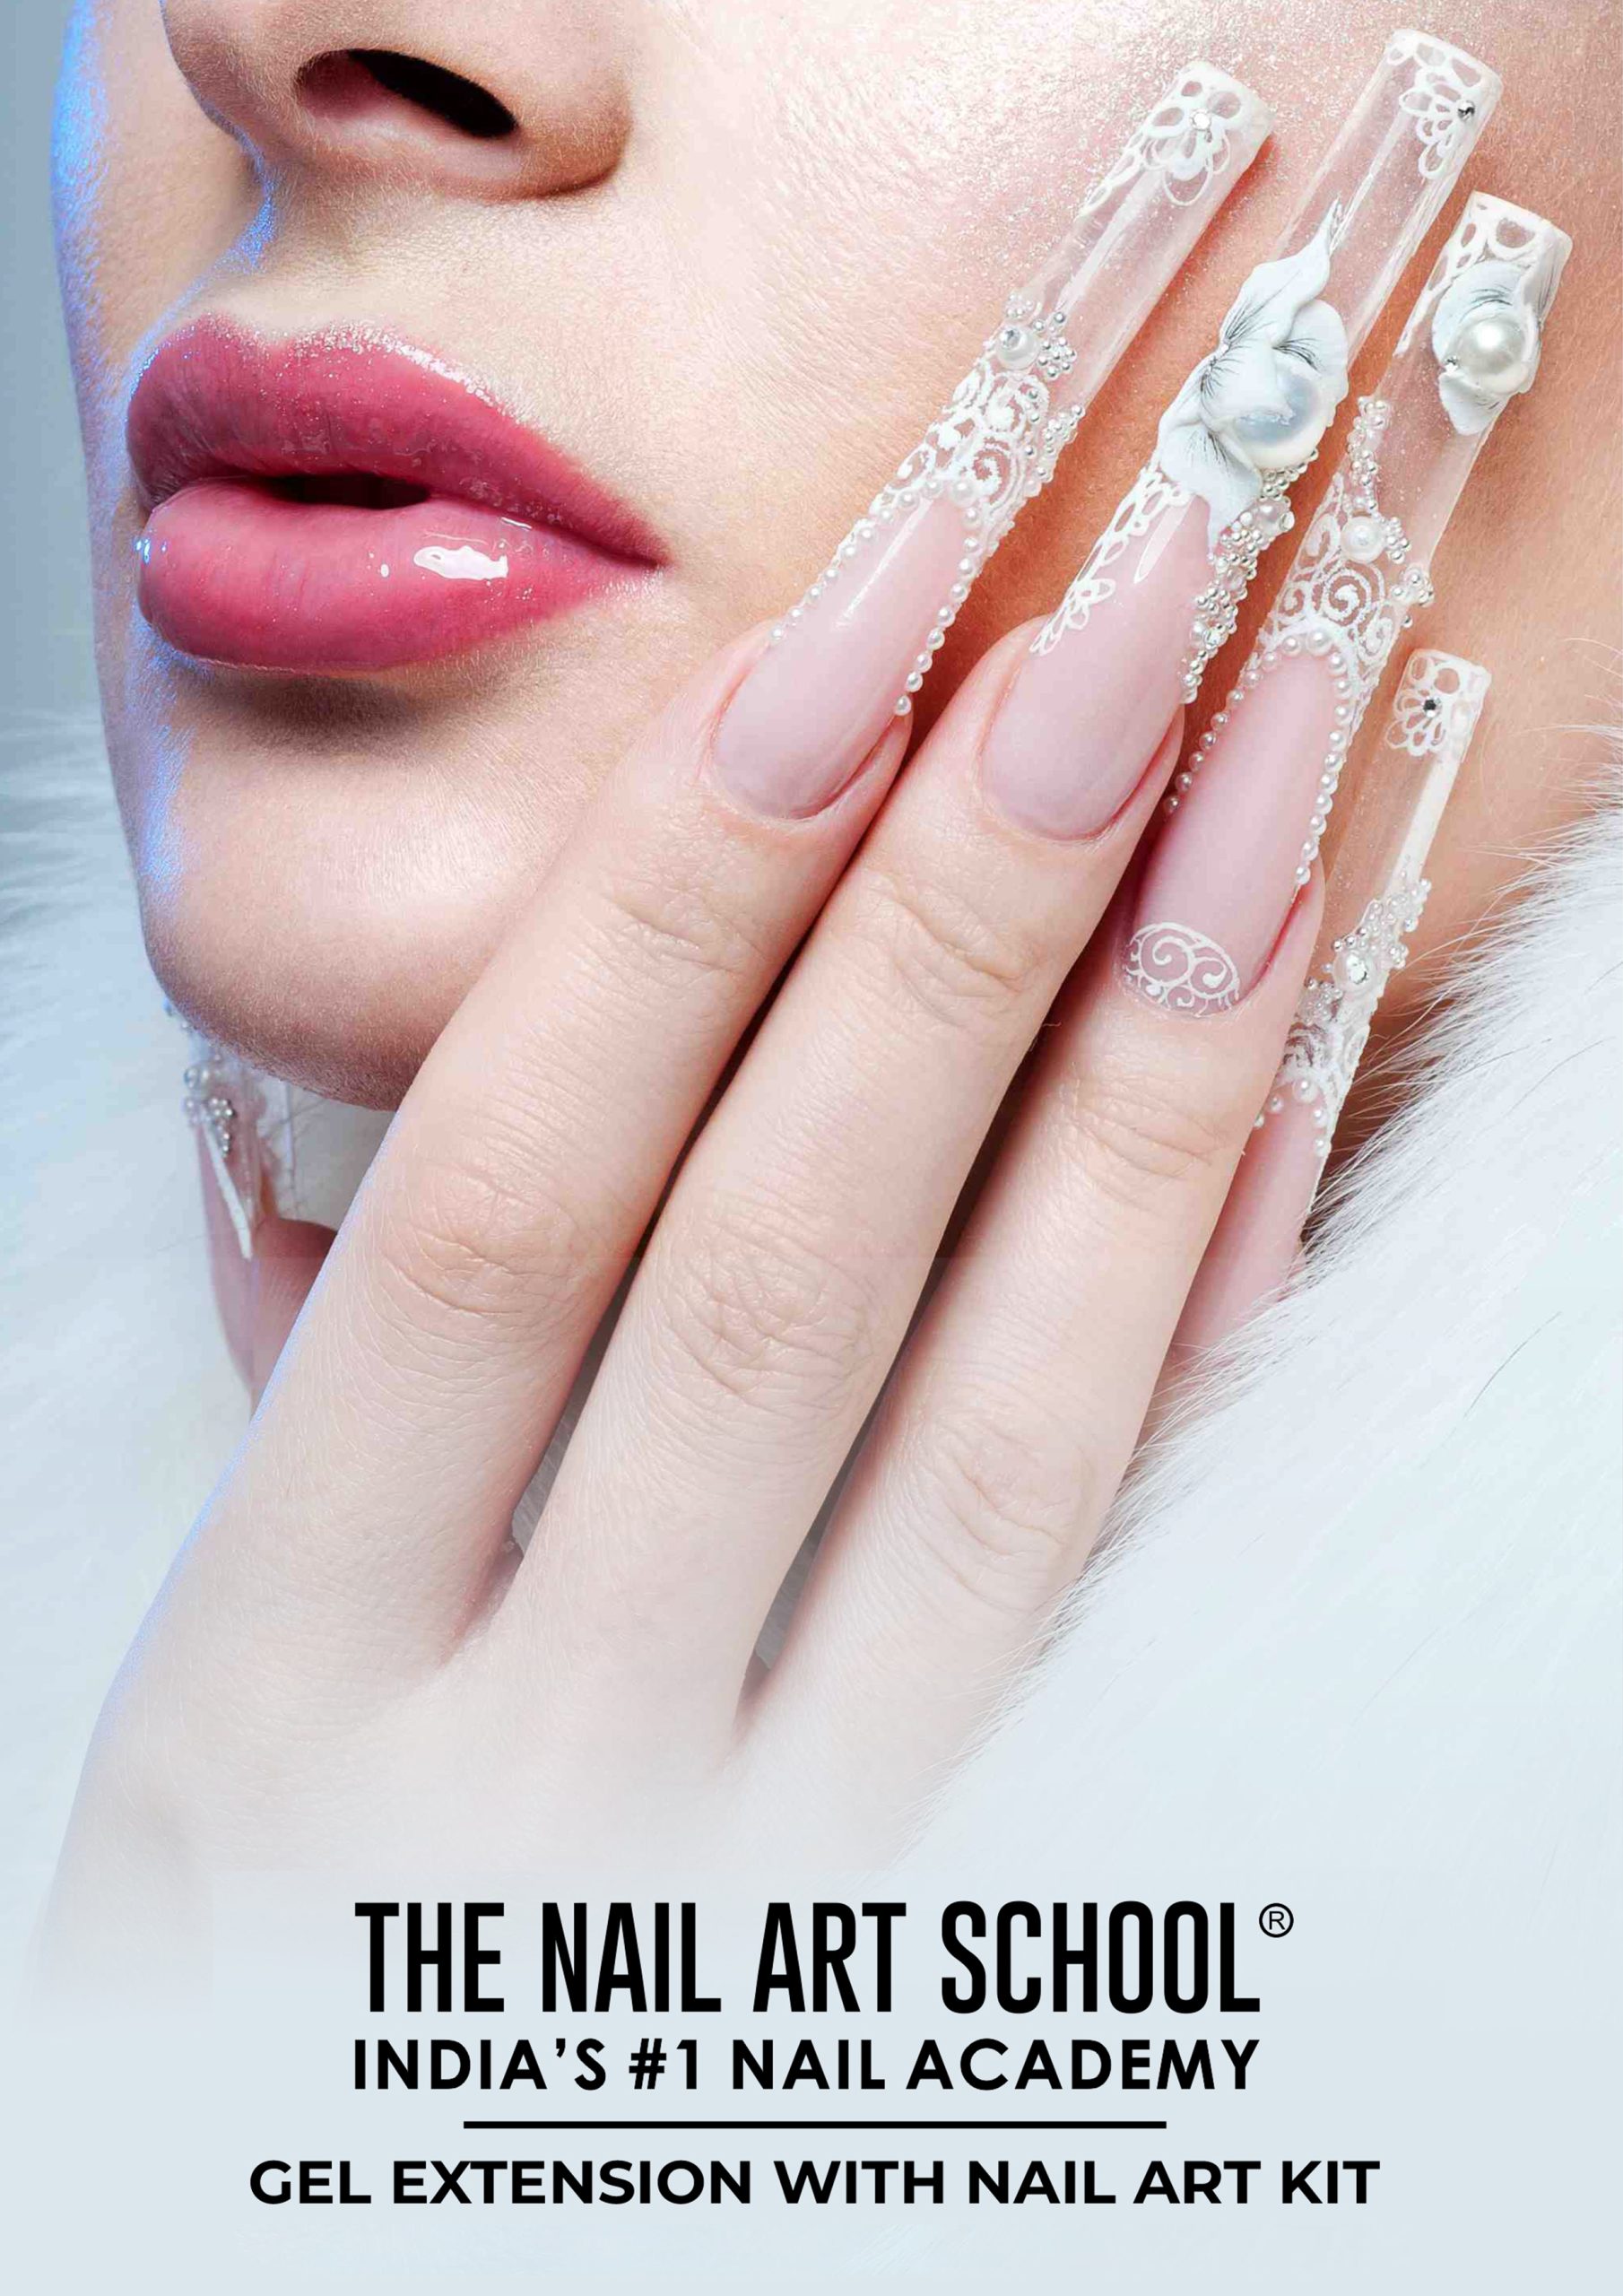 Nails Mantra -Salon & Academy (@nails.mantra) • Instagram photos and videos